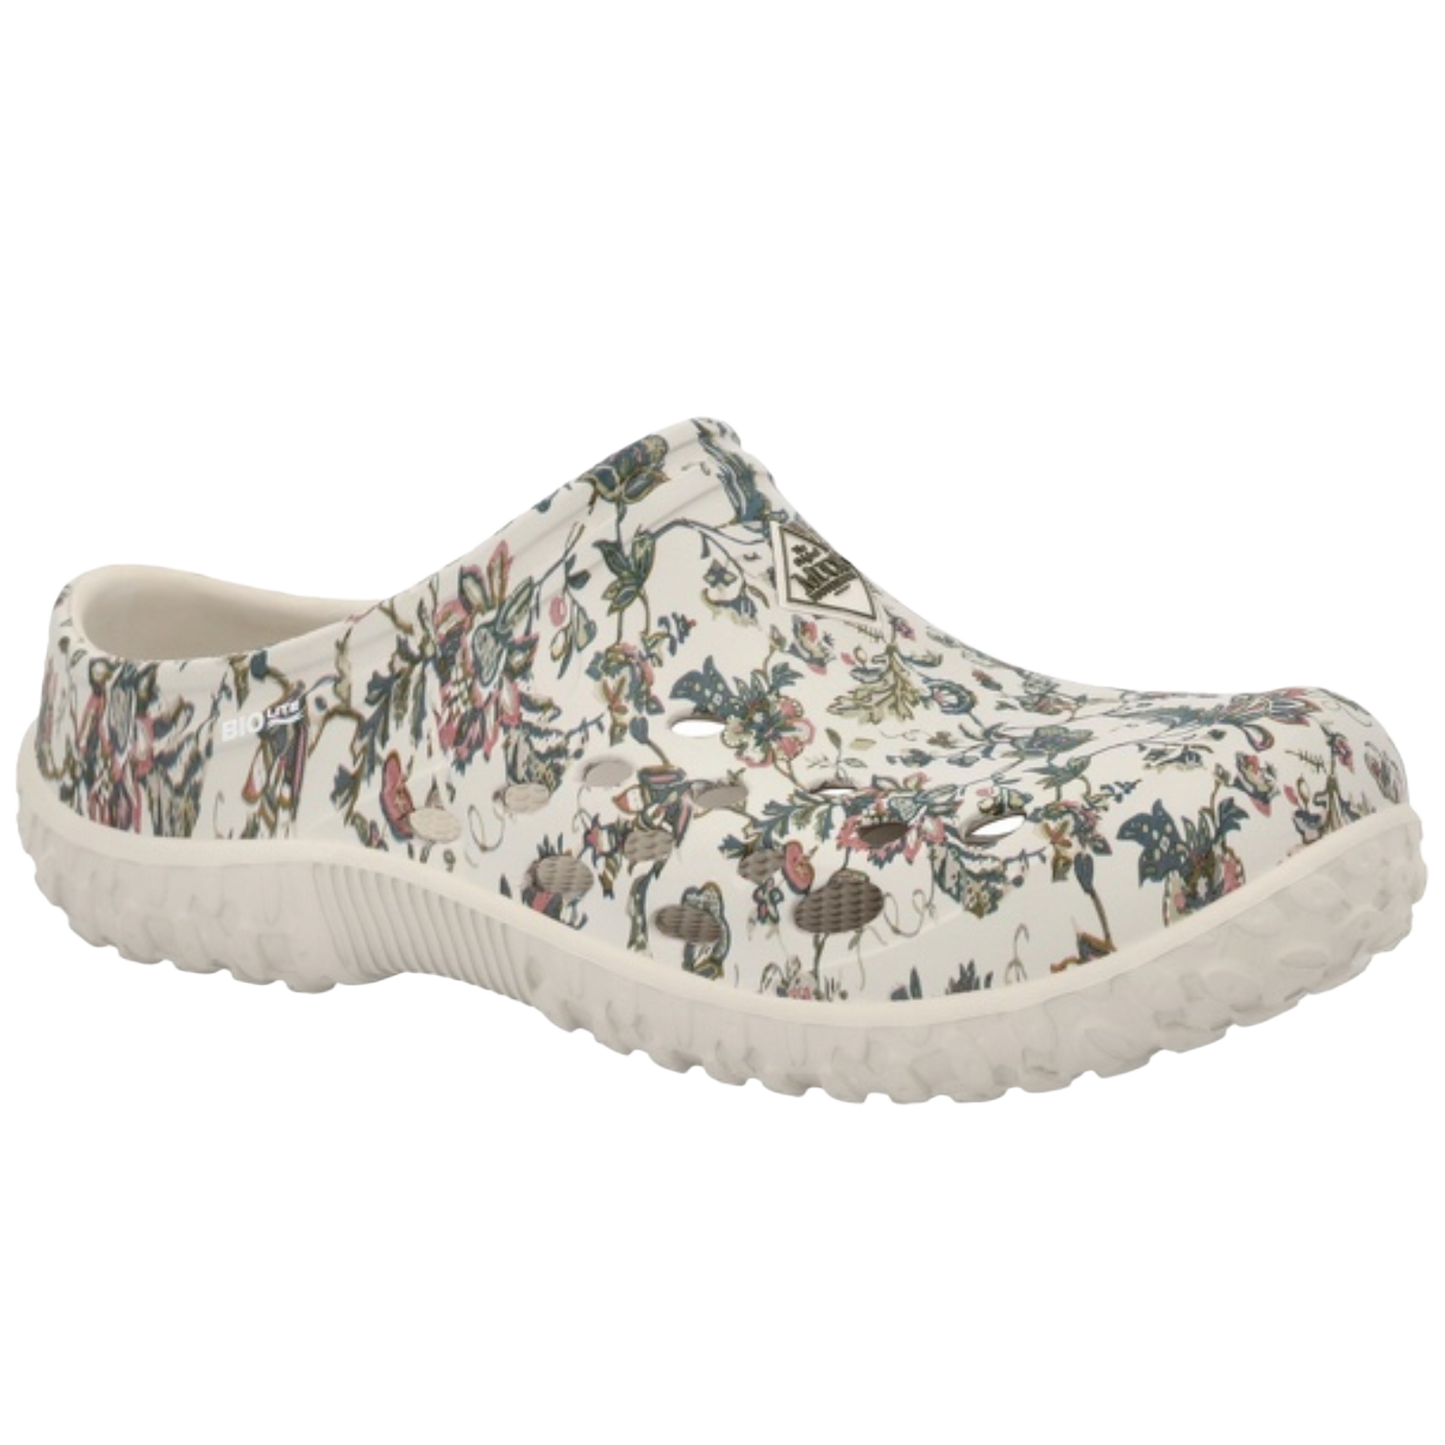 Muck® Ladies Muckster Floral White Lite Clog Slip On Shoes MLCW1FLR